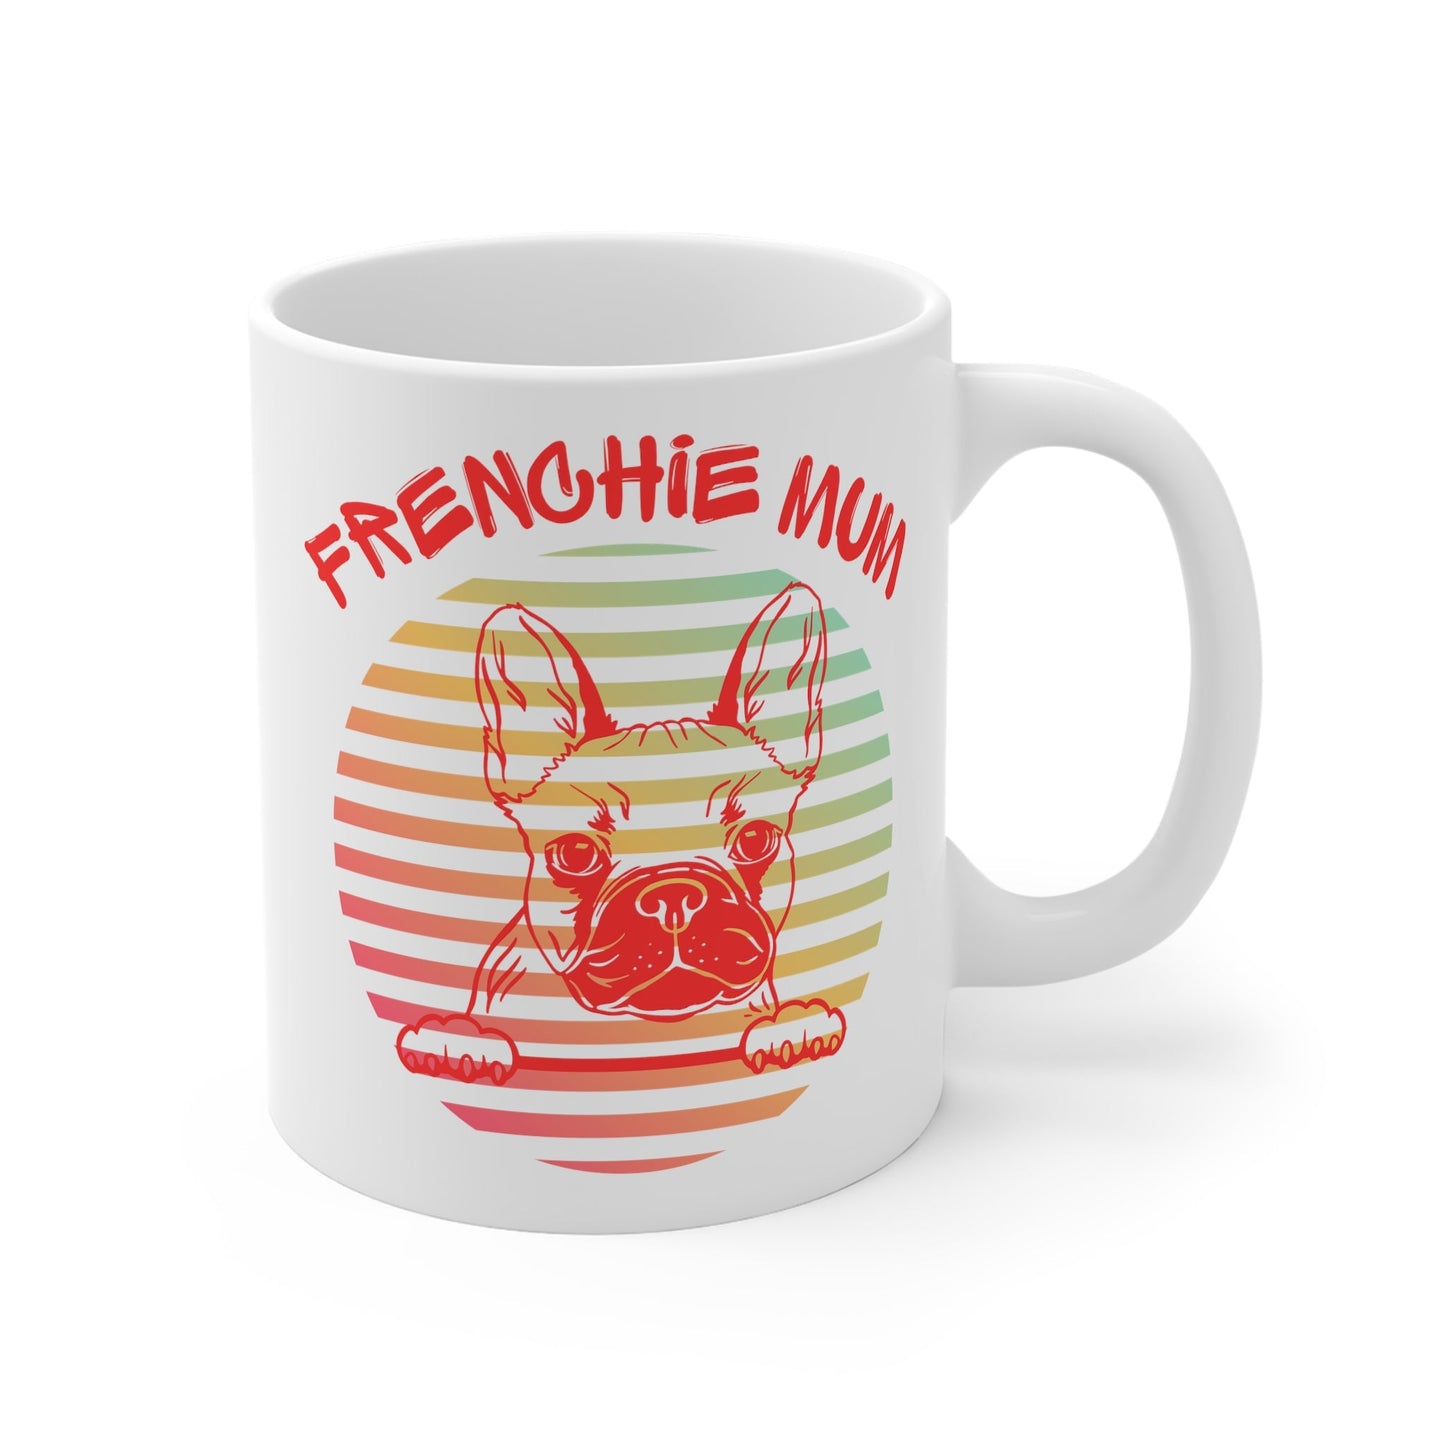 Frenchie Mum White Mug - Designs by DKMc